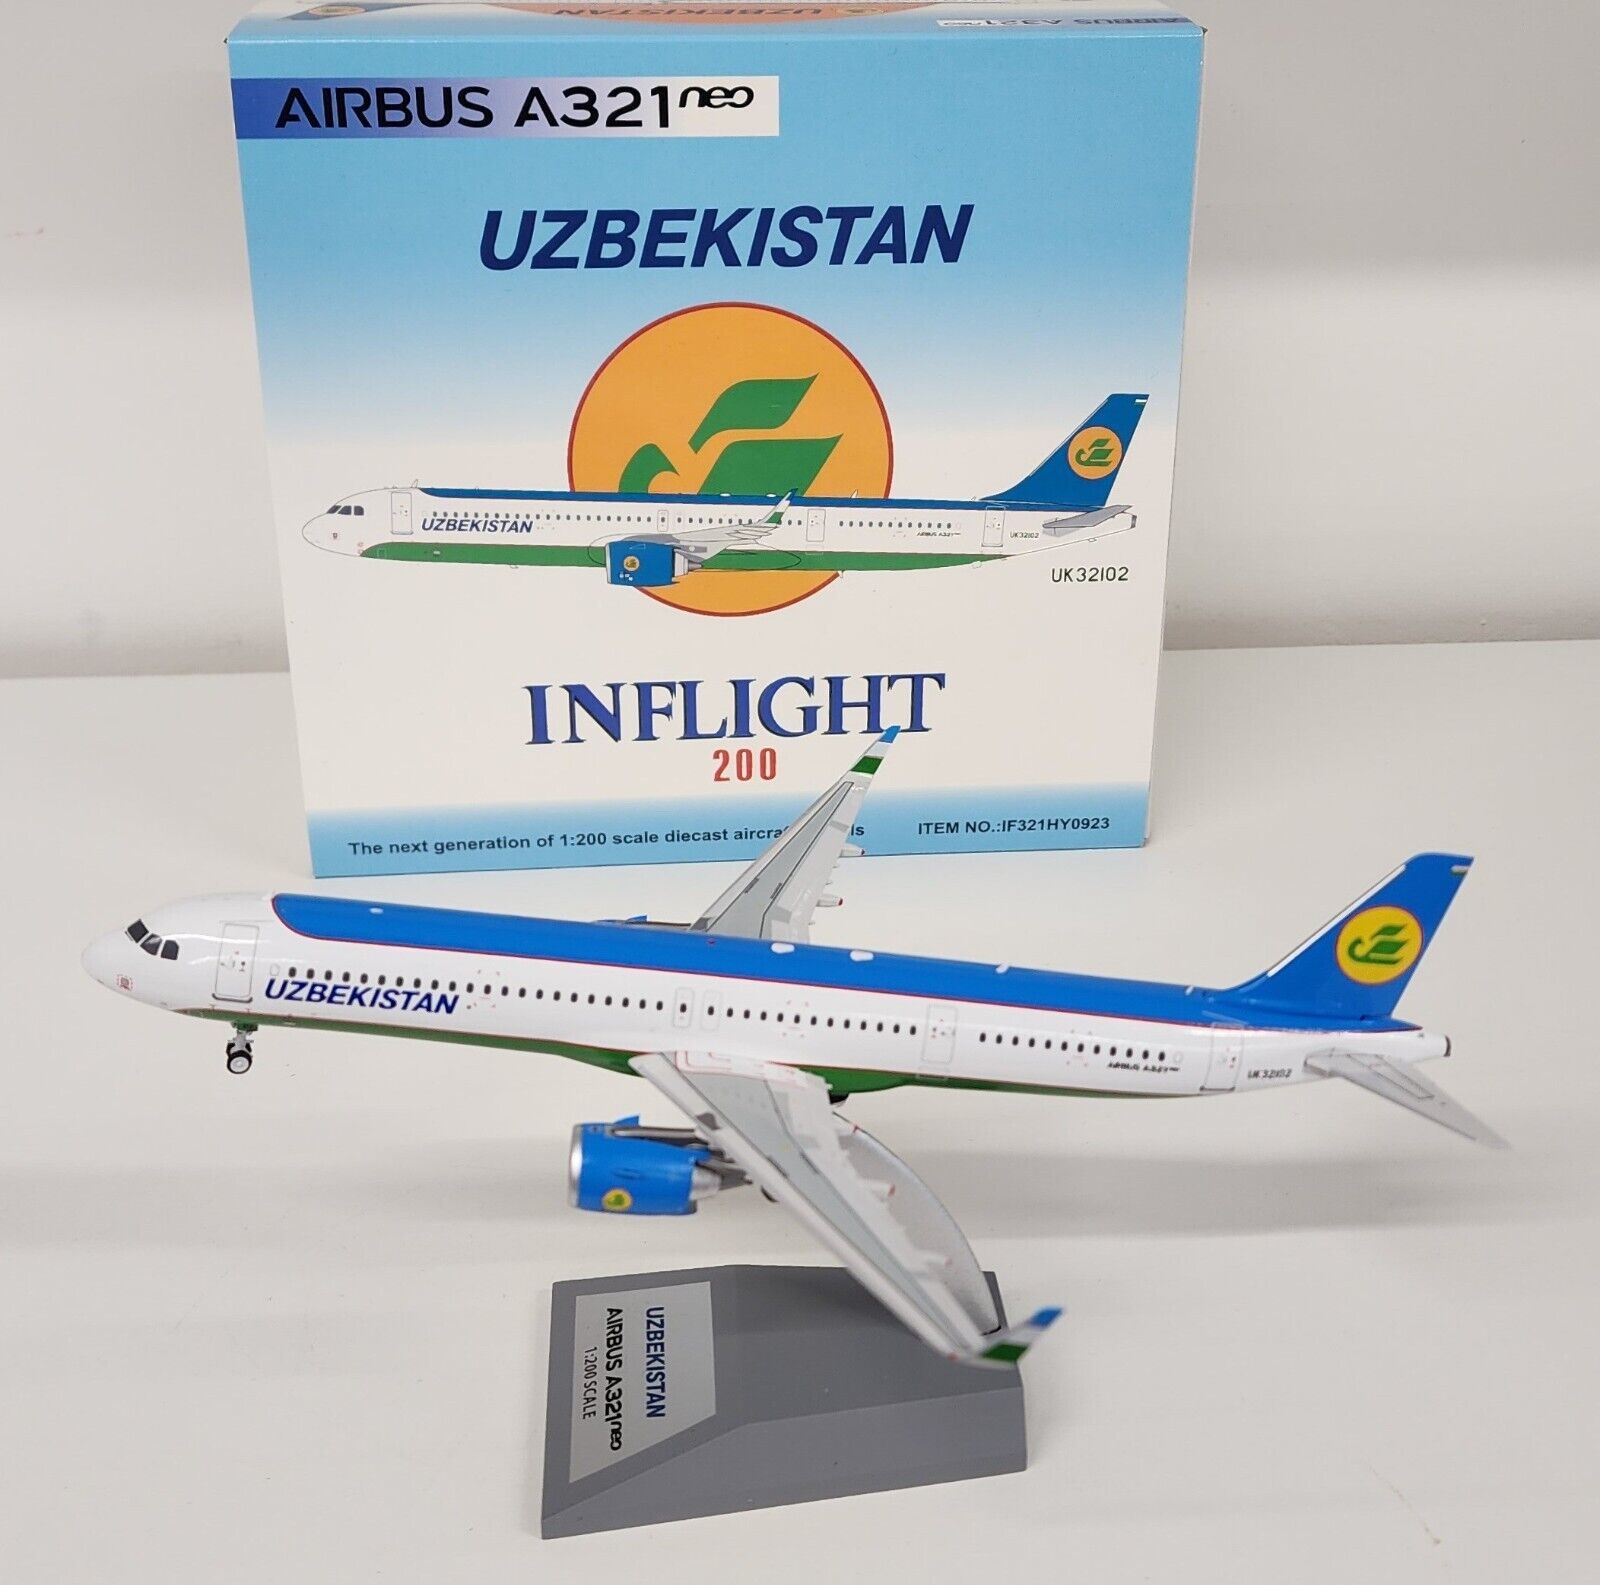 InFlight200 Airbus A321-253NX Uzbekistan Airways UK32102